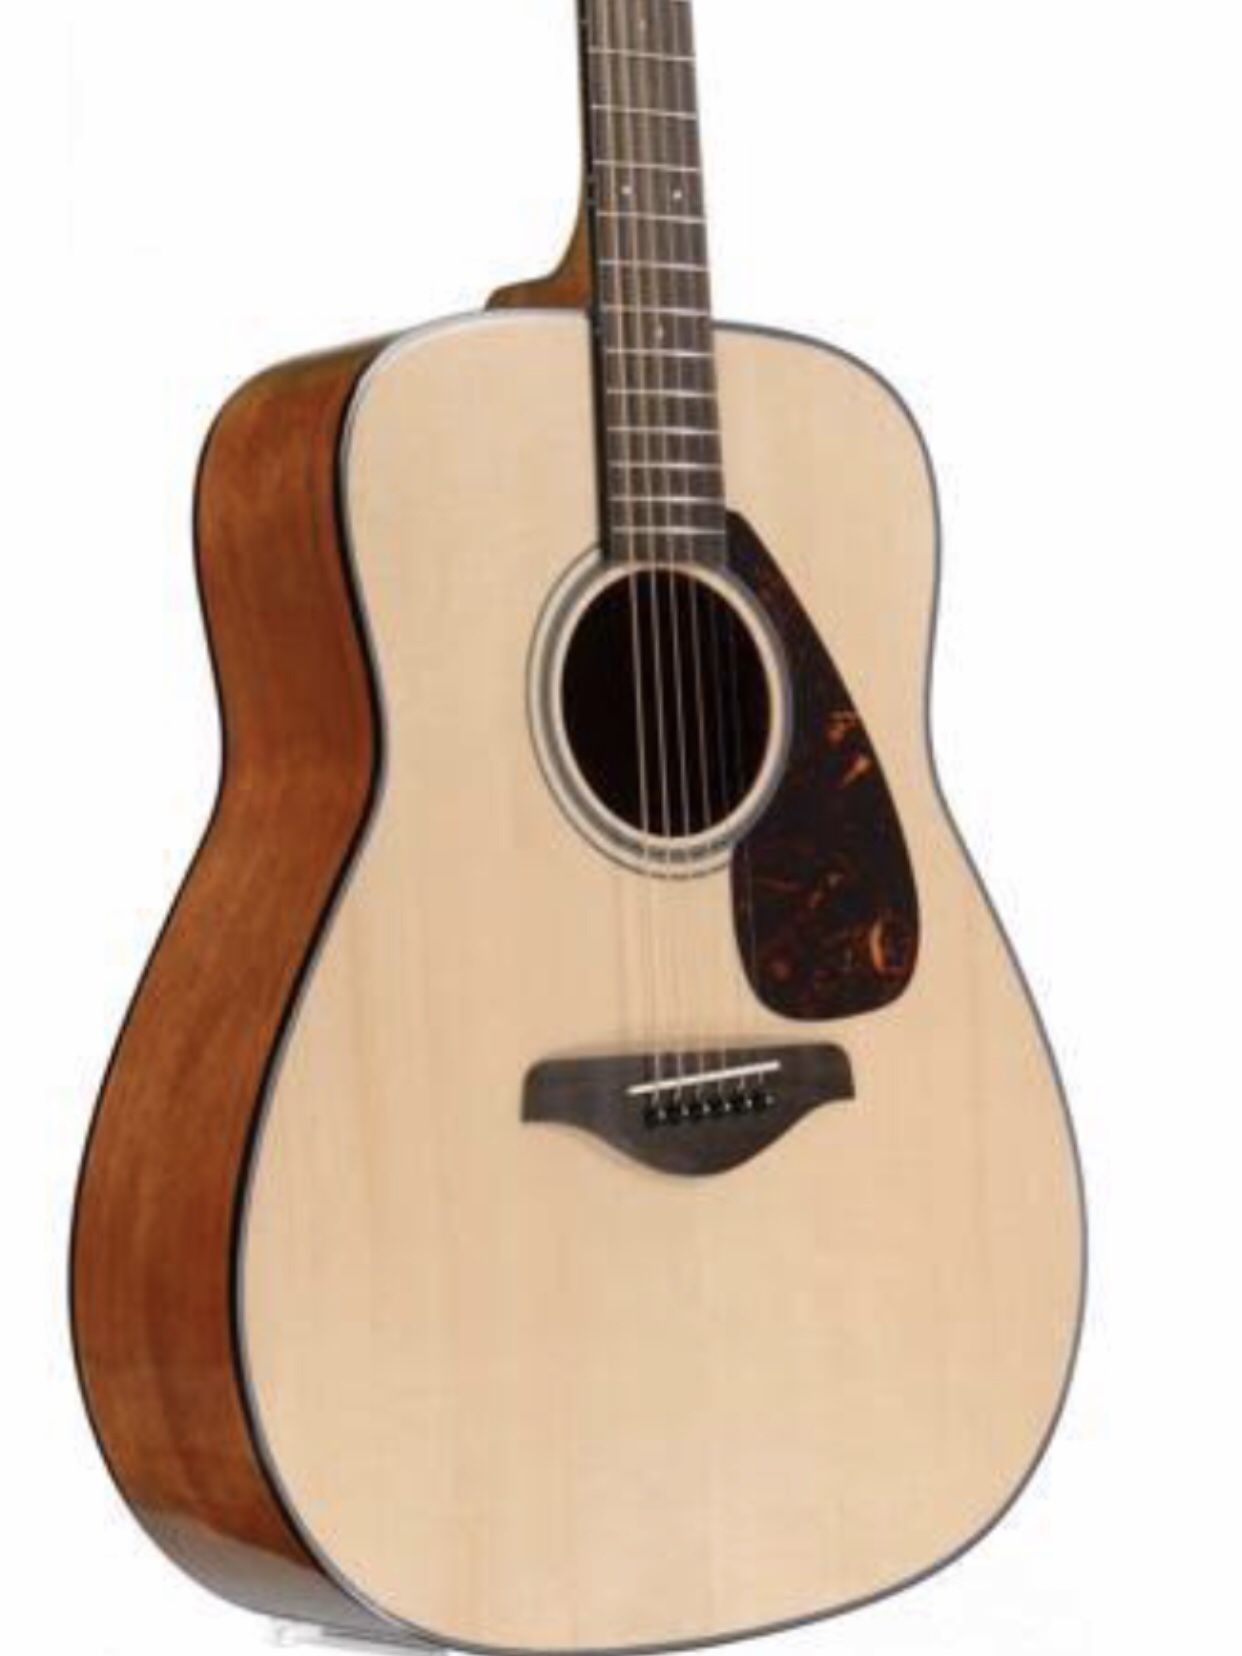 Yamaha FG700S Acoustic Folk Guitar, Brand New, never used.